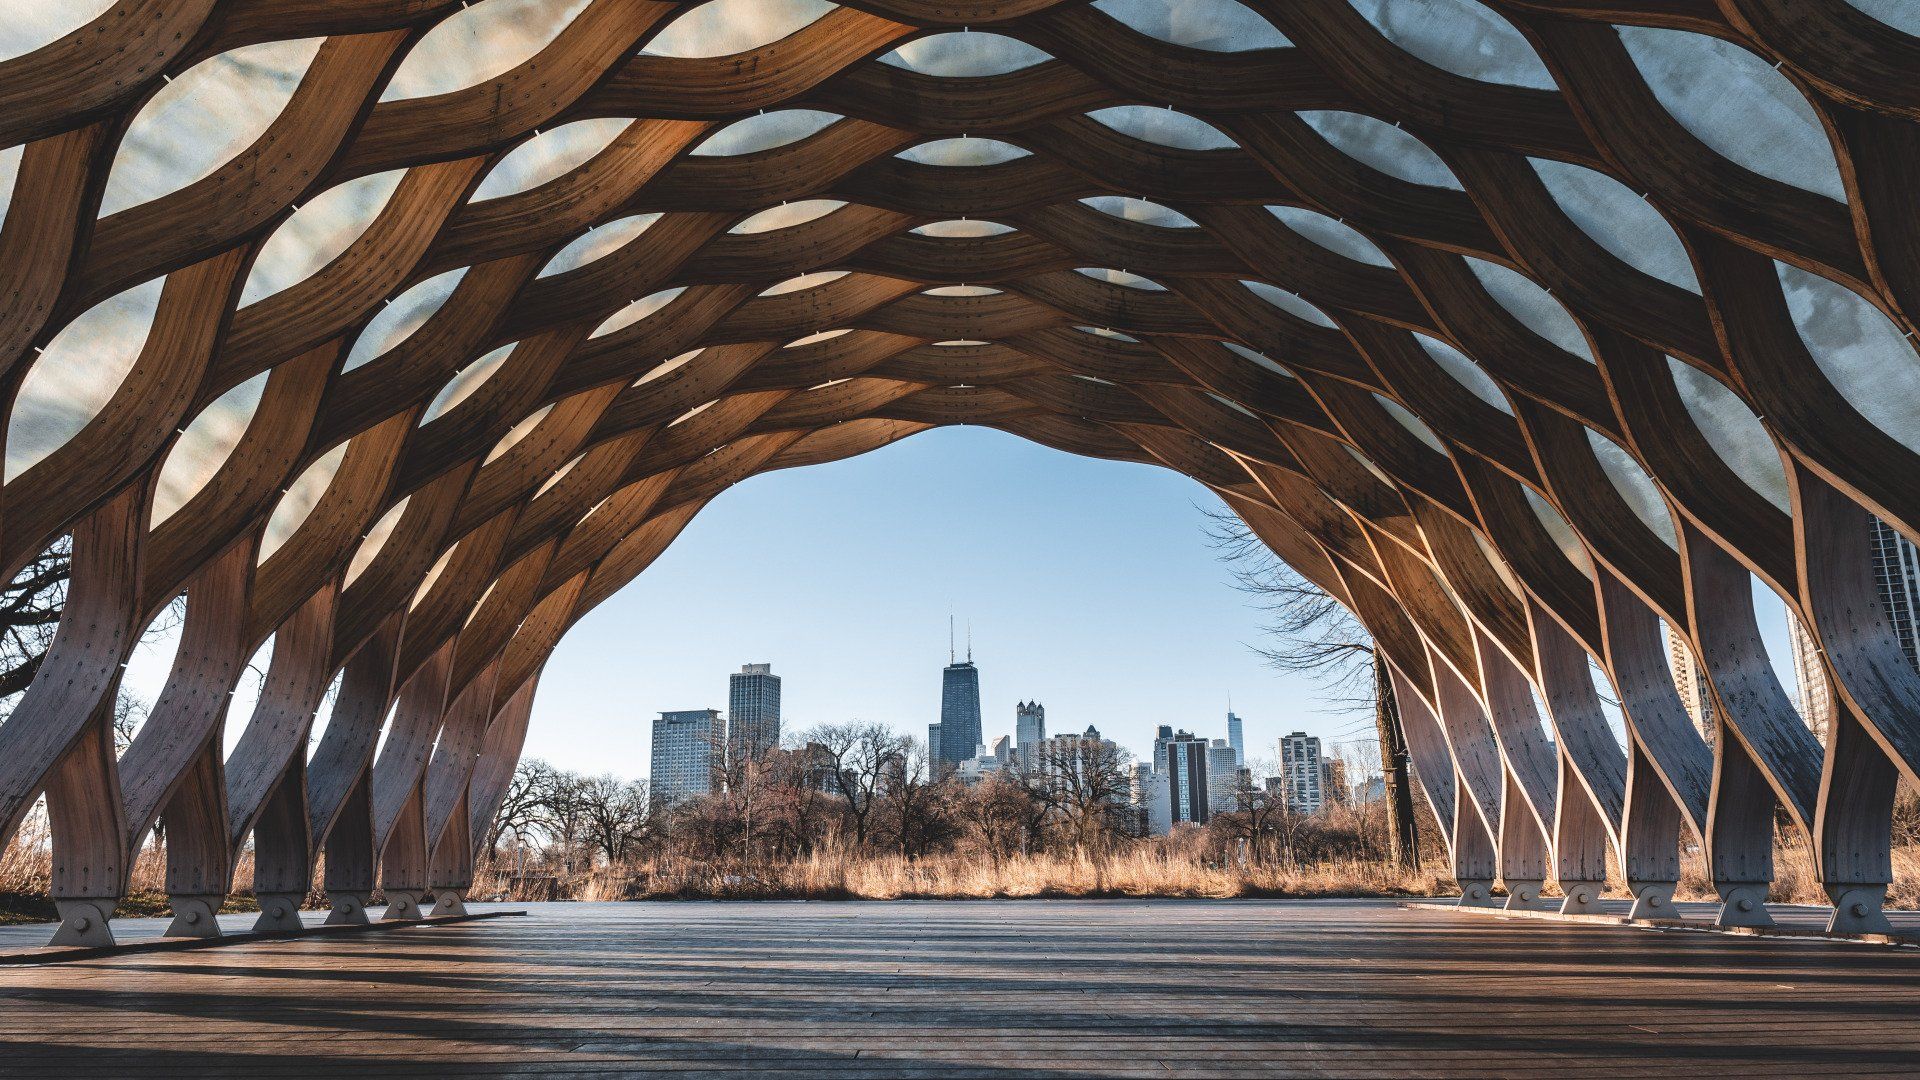 Skyline Photo of Chicago through tunnel